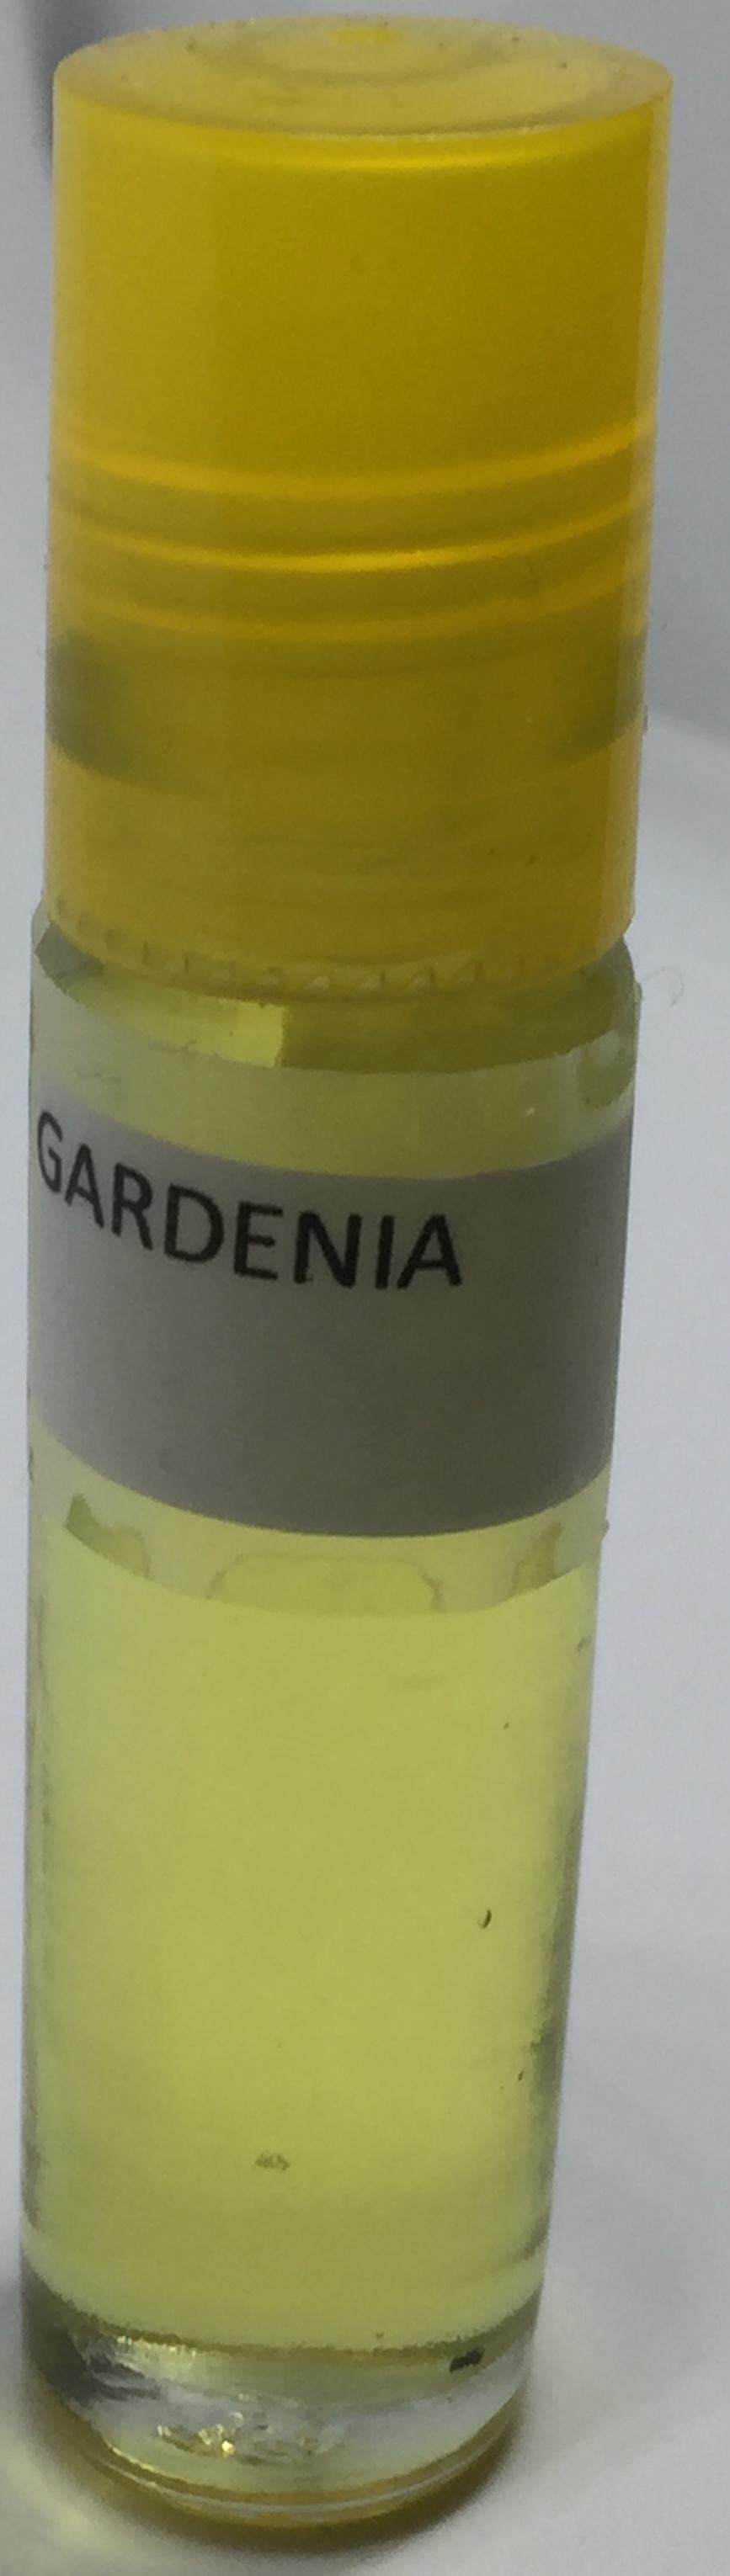 Gardenia: Fragrance(Perfume)Body Oil Unisex